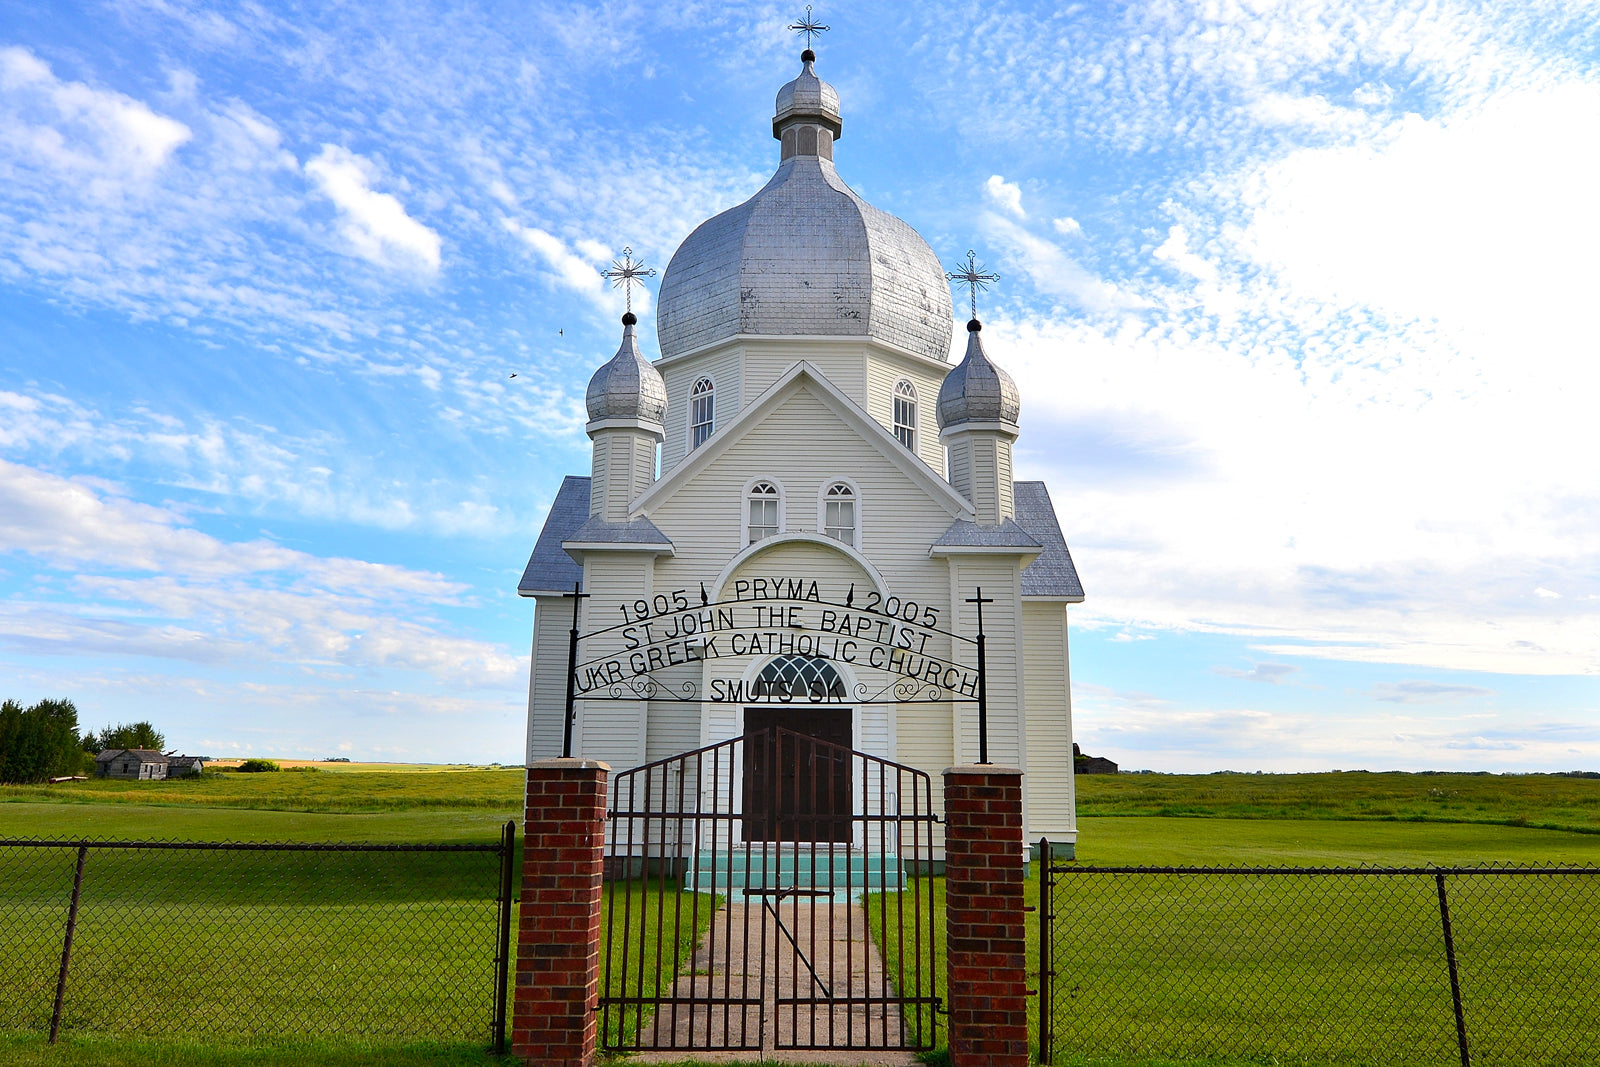 The Ukrainian Churches of the Canadian Prairies